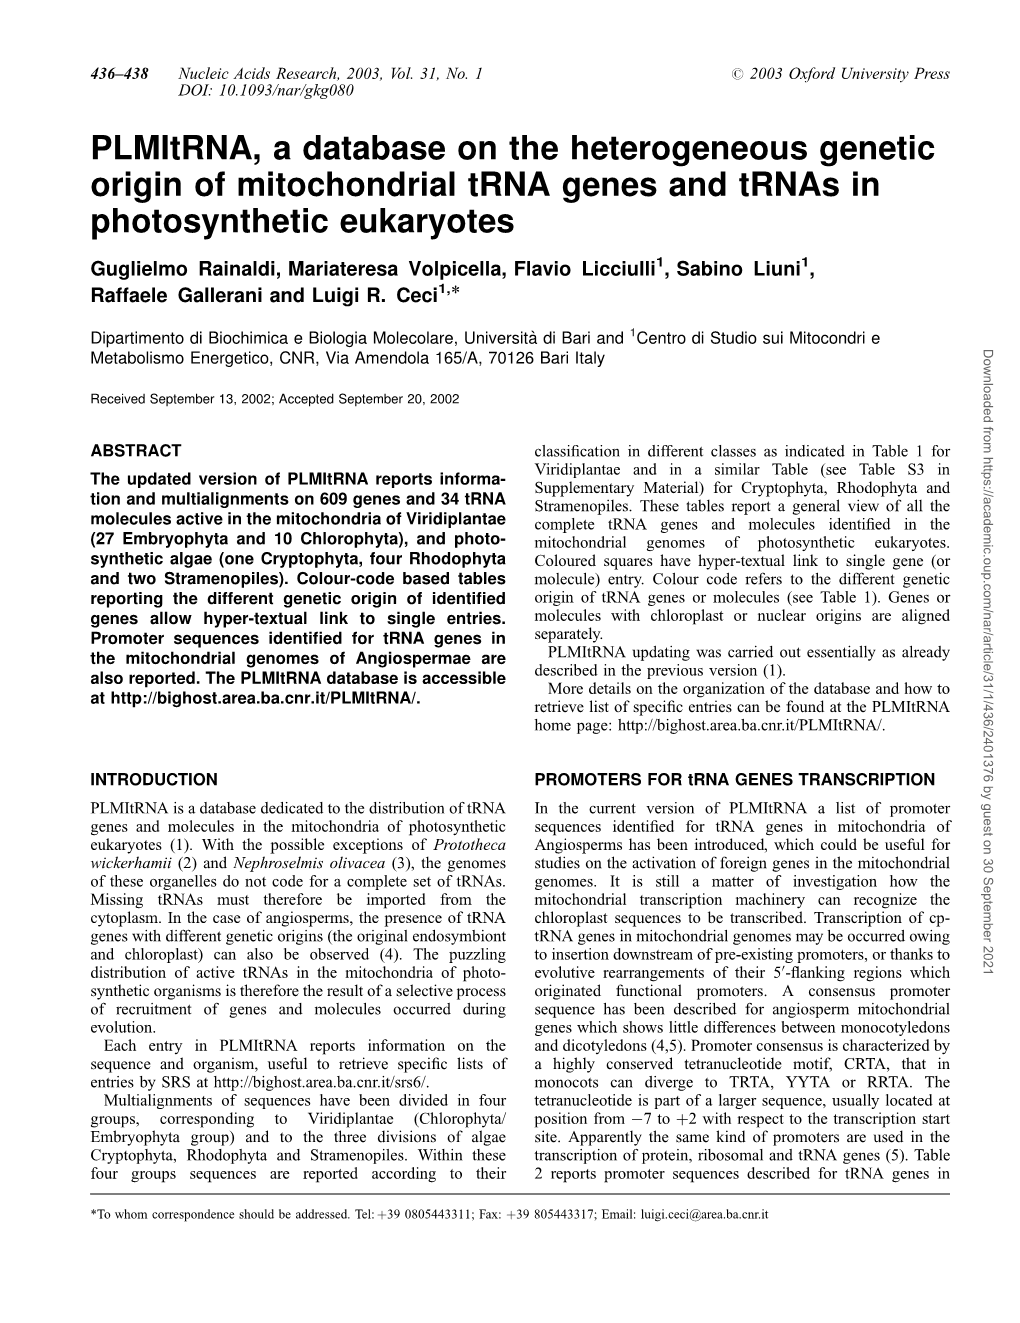 Plmitrna, a Database on the Heterogeneous Genetic Origin of Mitochondrial Trna Genes and Trnas in Photosynthetic Eukaryotes